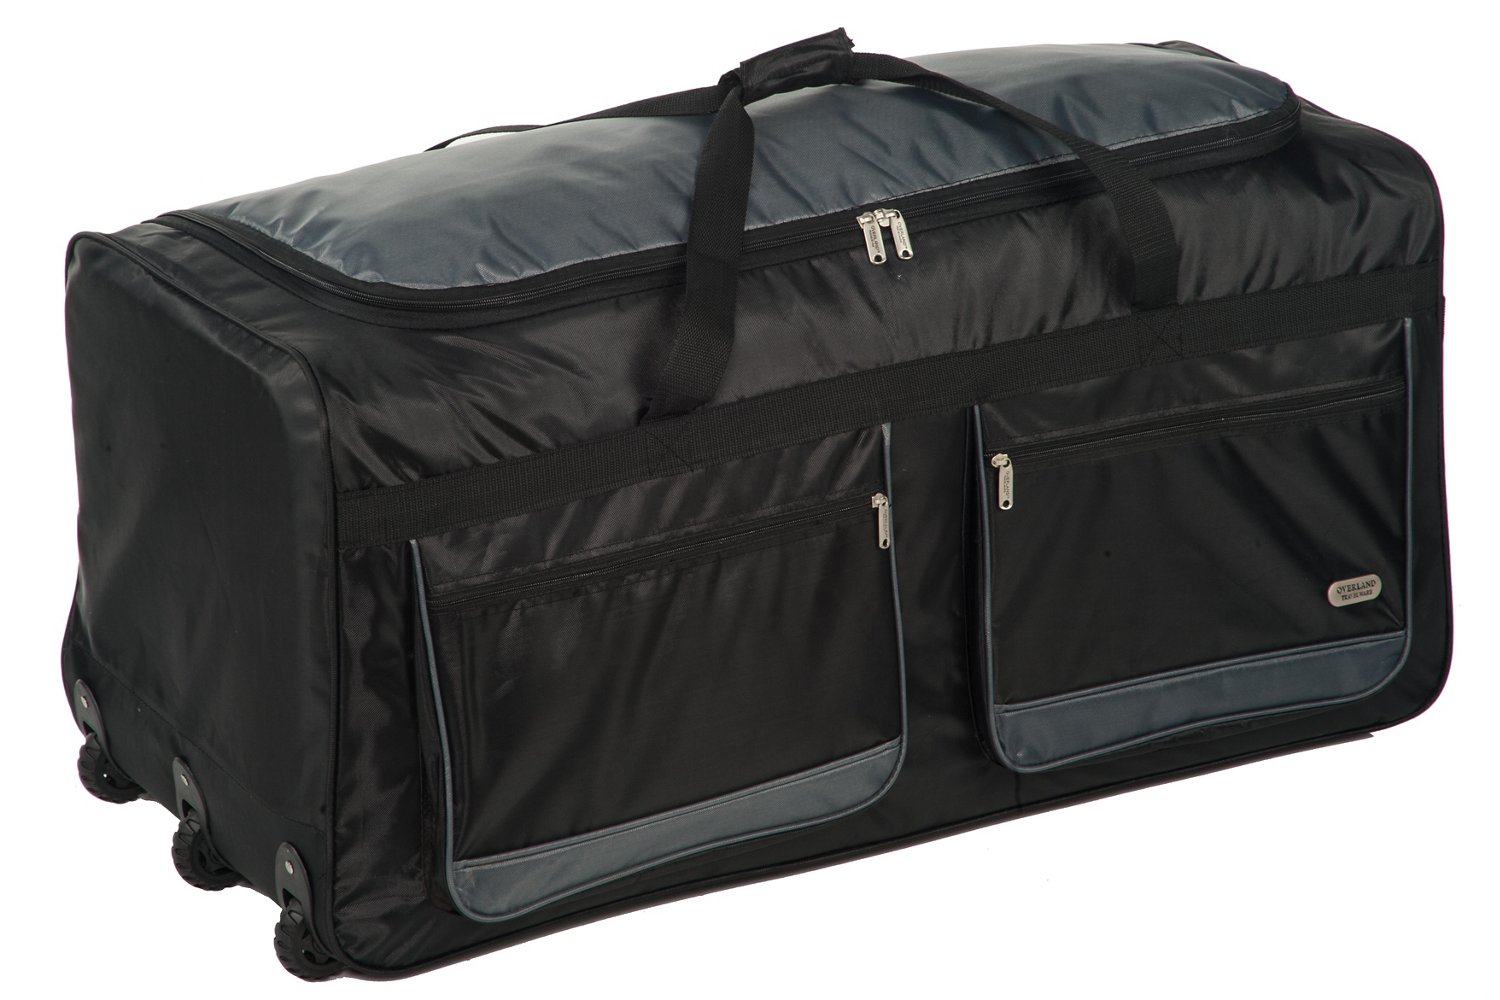 Travel & Luggage | Travel Luggage Bags & Sets | Academy